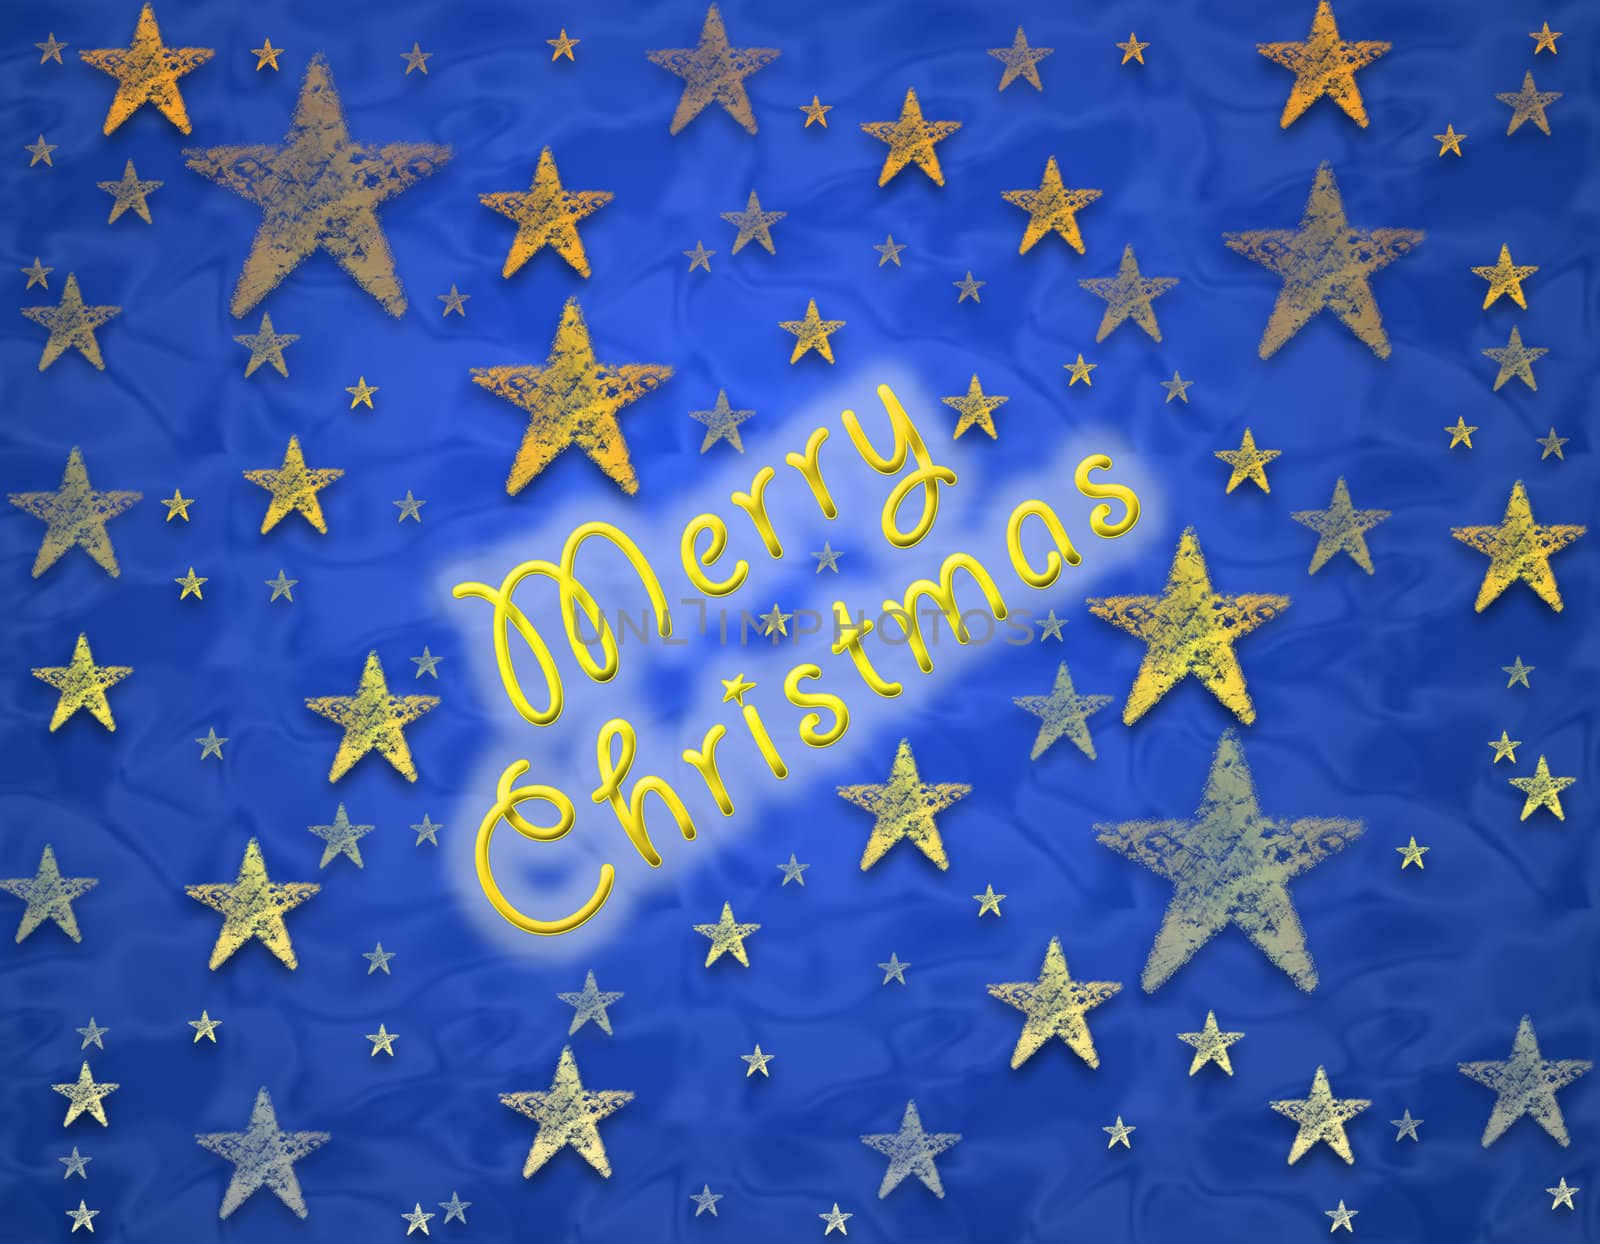 Christmas background with Christmas symbols and merry christmas
